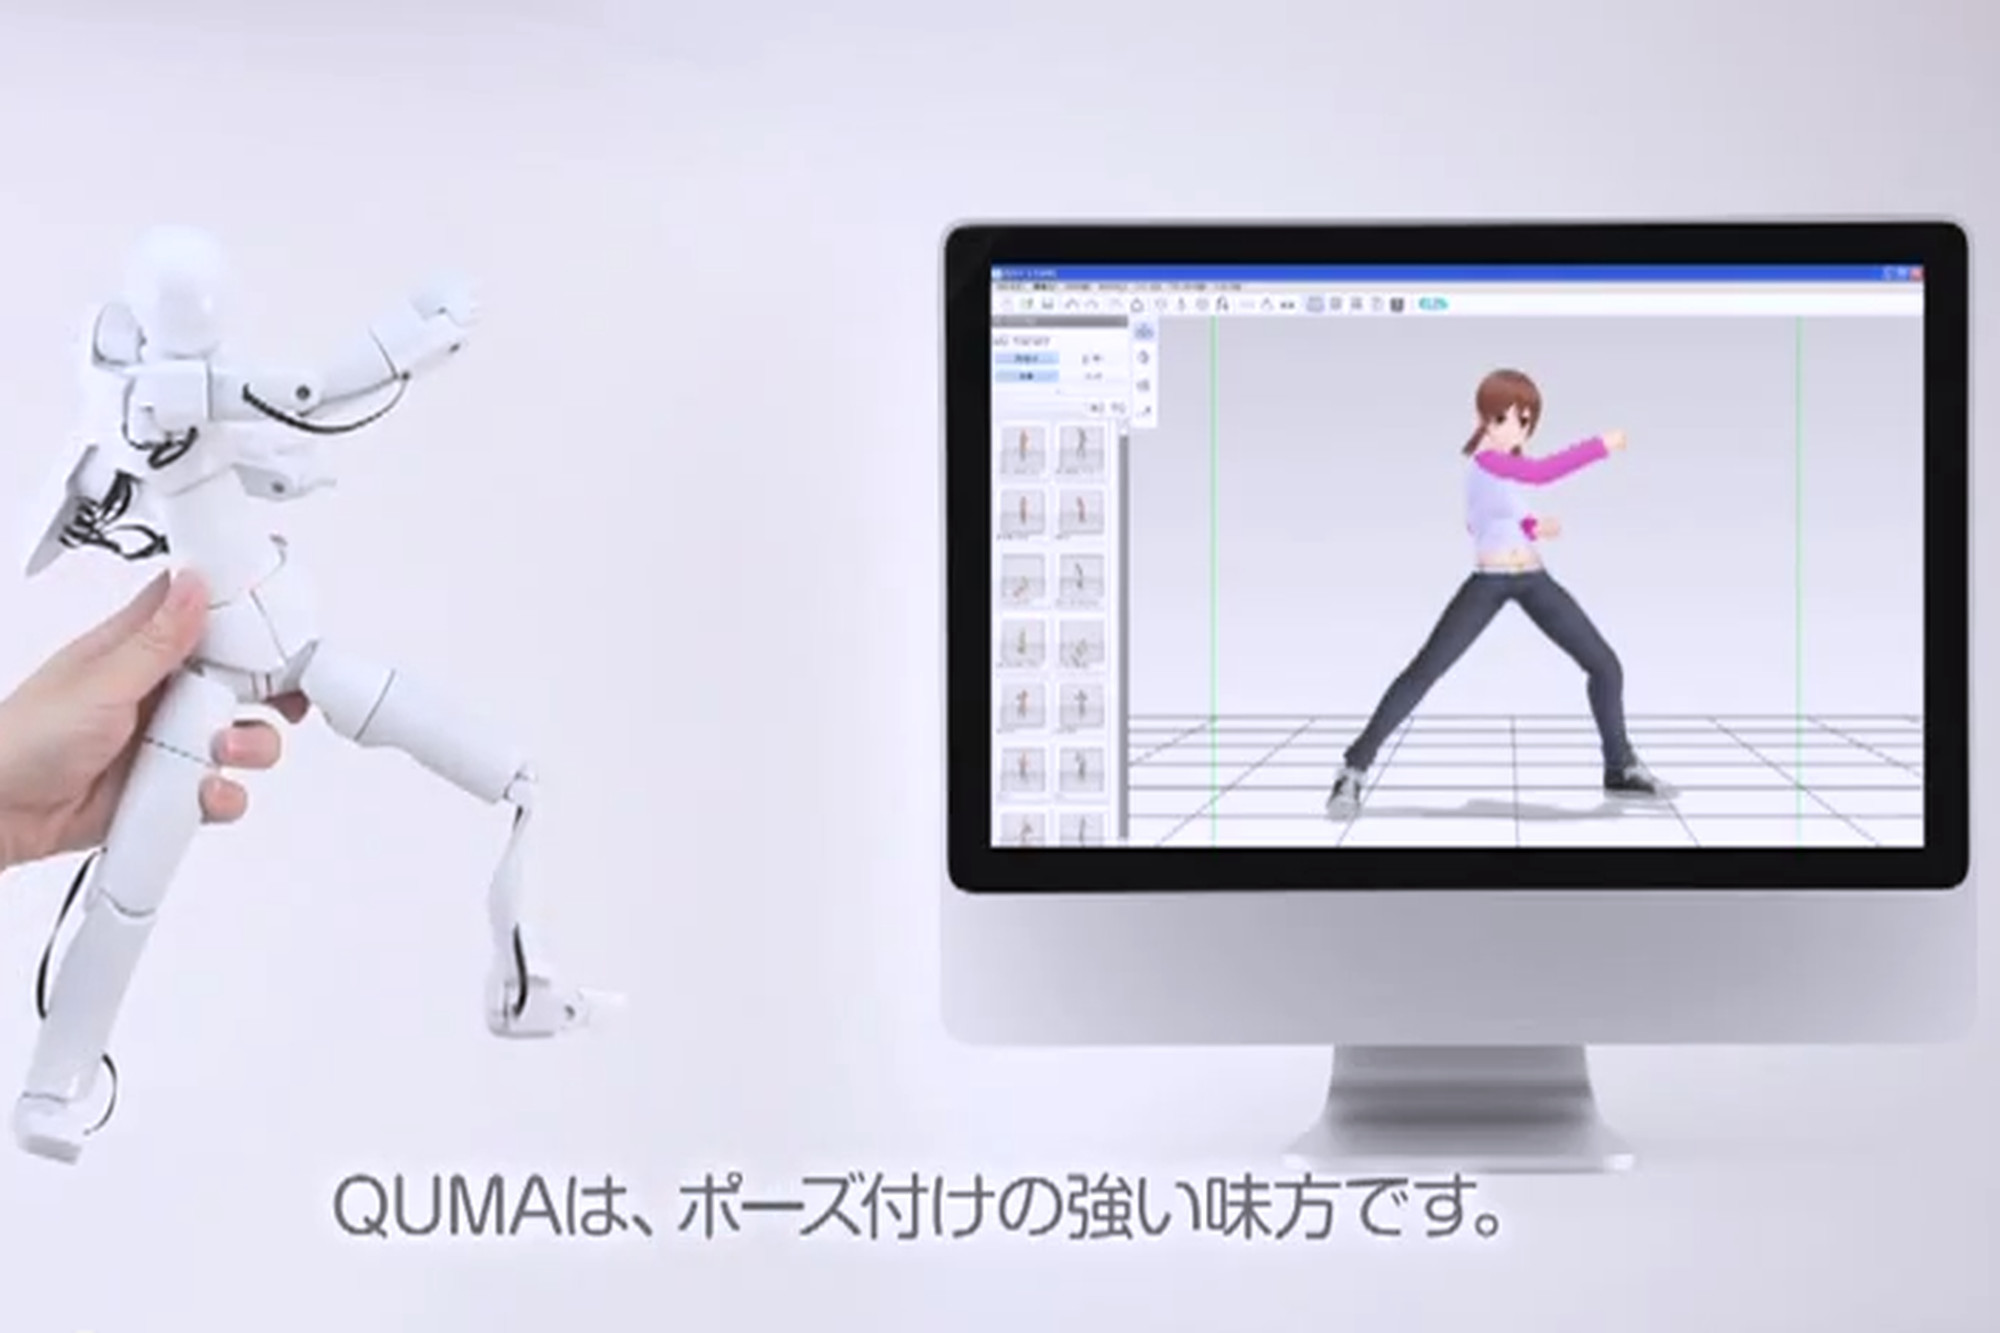 Qumarion moves 3D models based on your mannequin